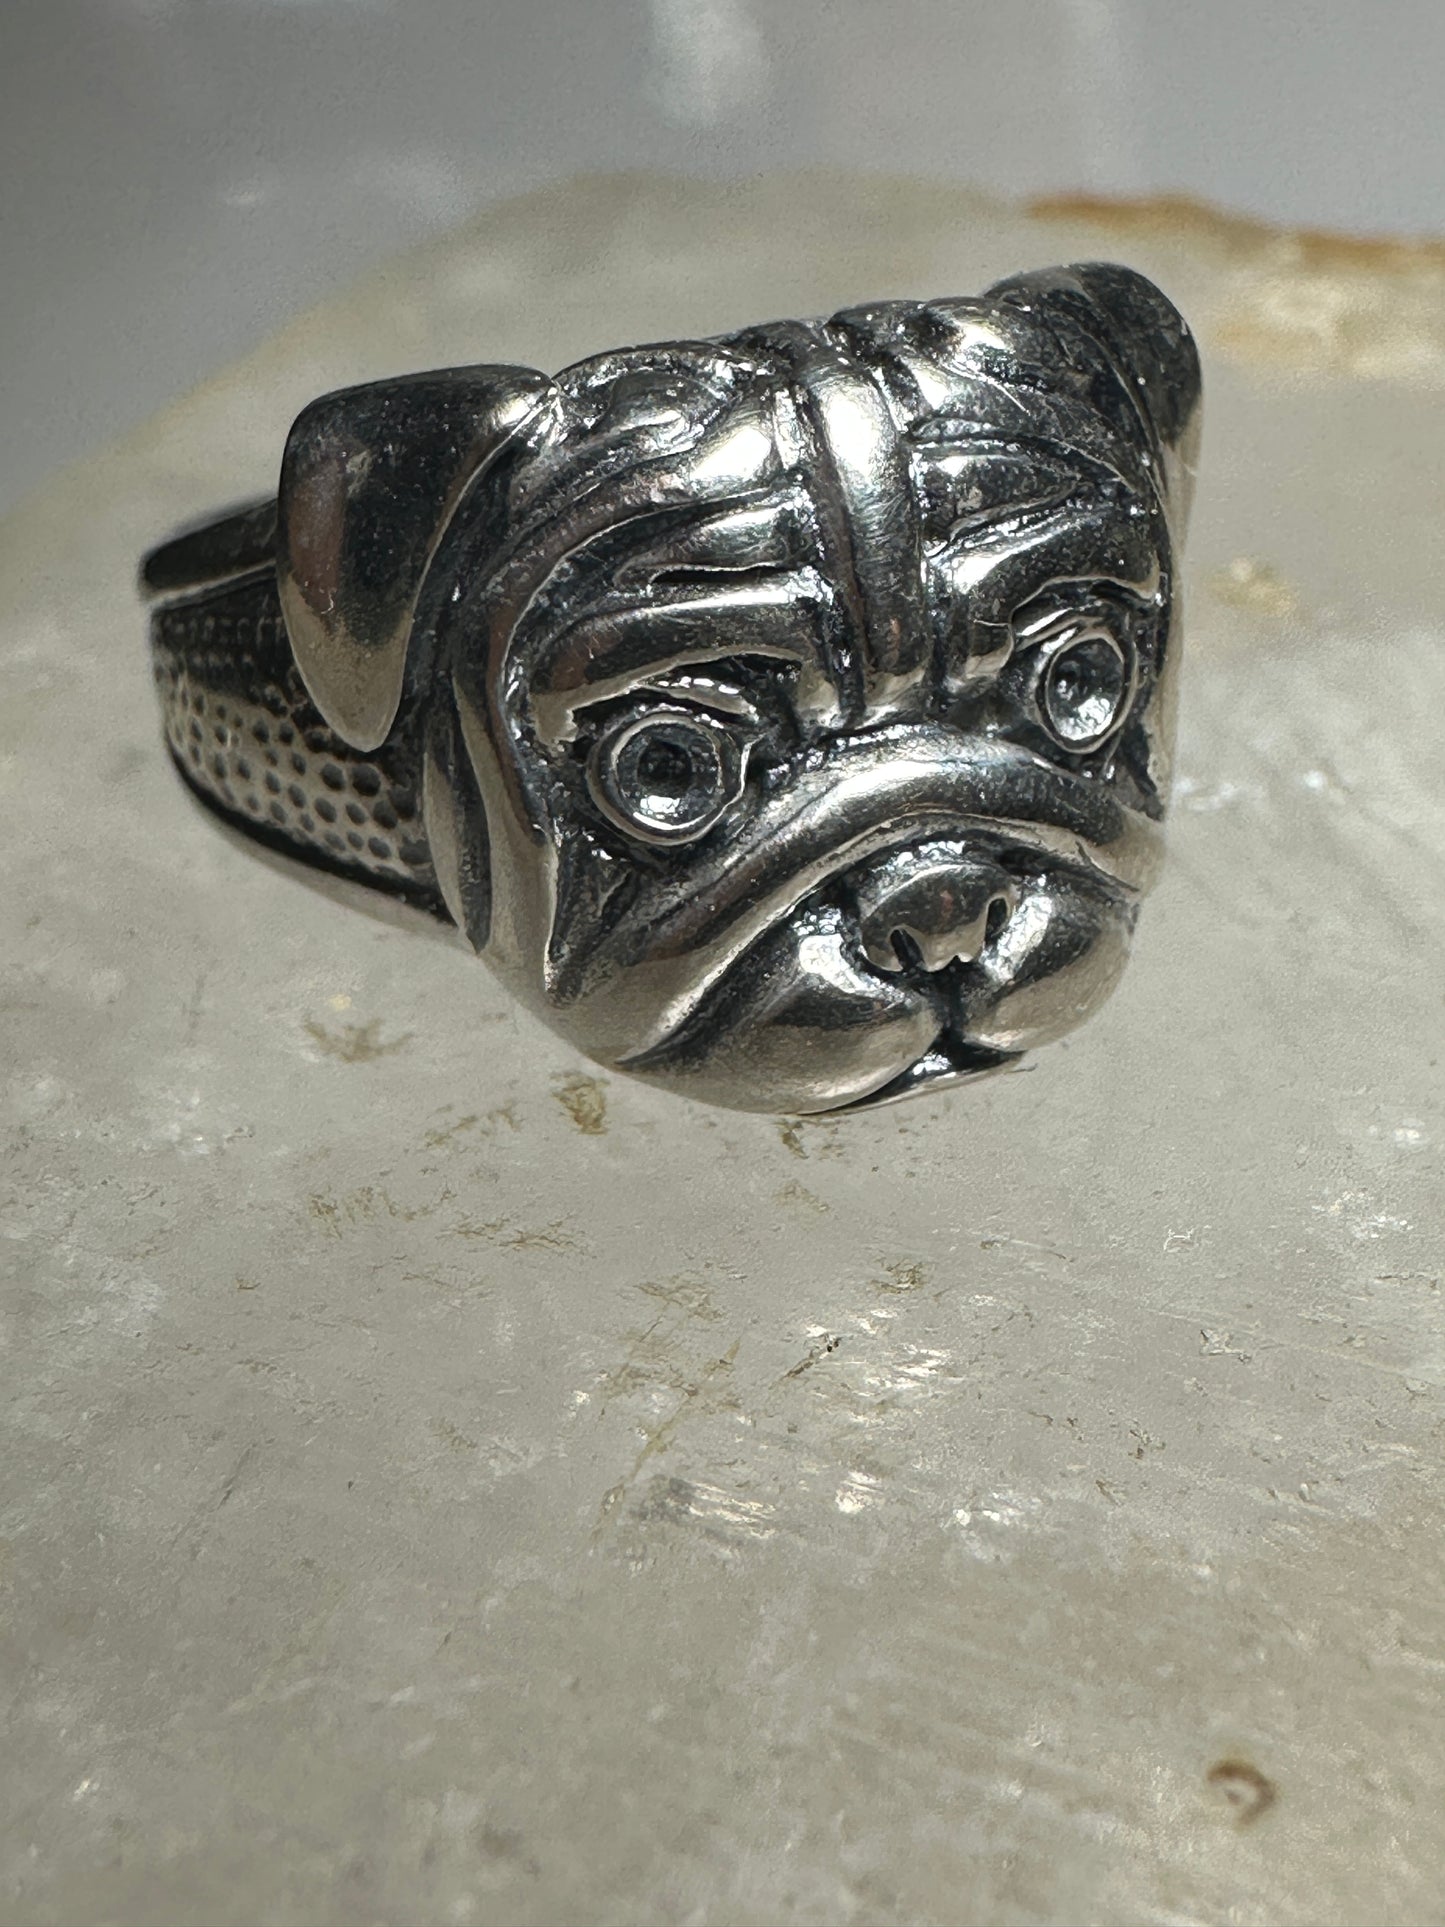 Bulldog ring dog band size 9.75 sterling silver women men